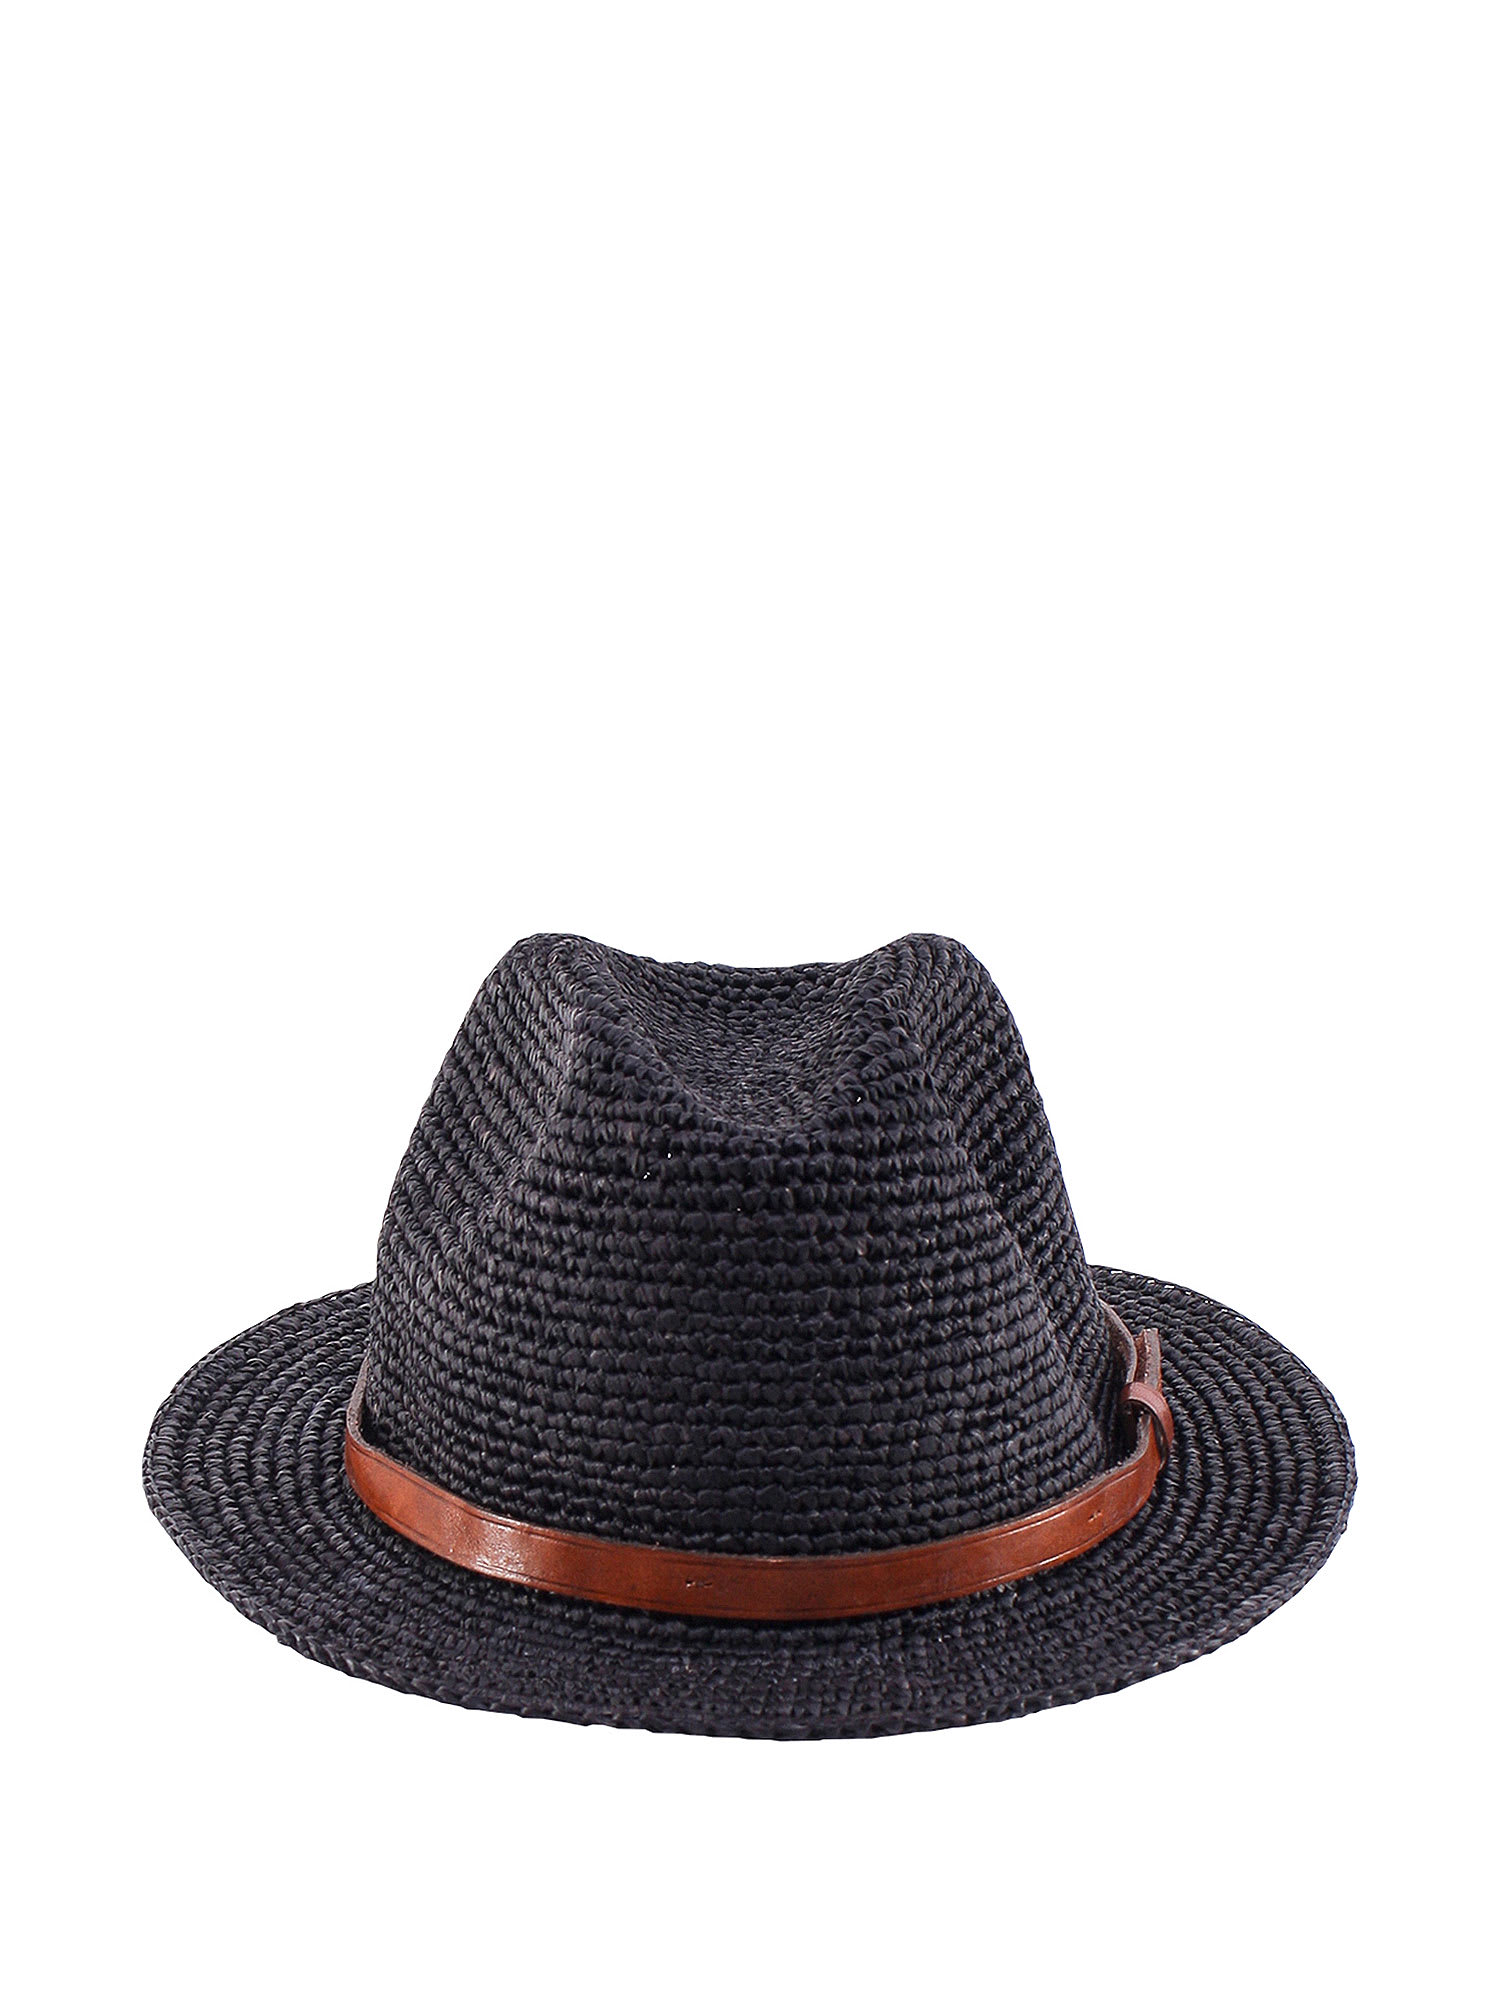 Ibeliv Lubeman Hat